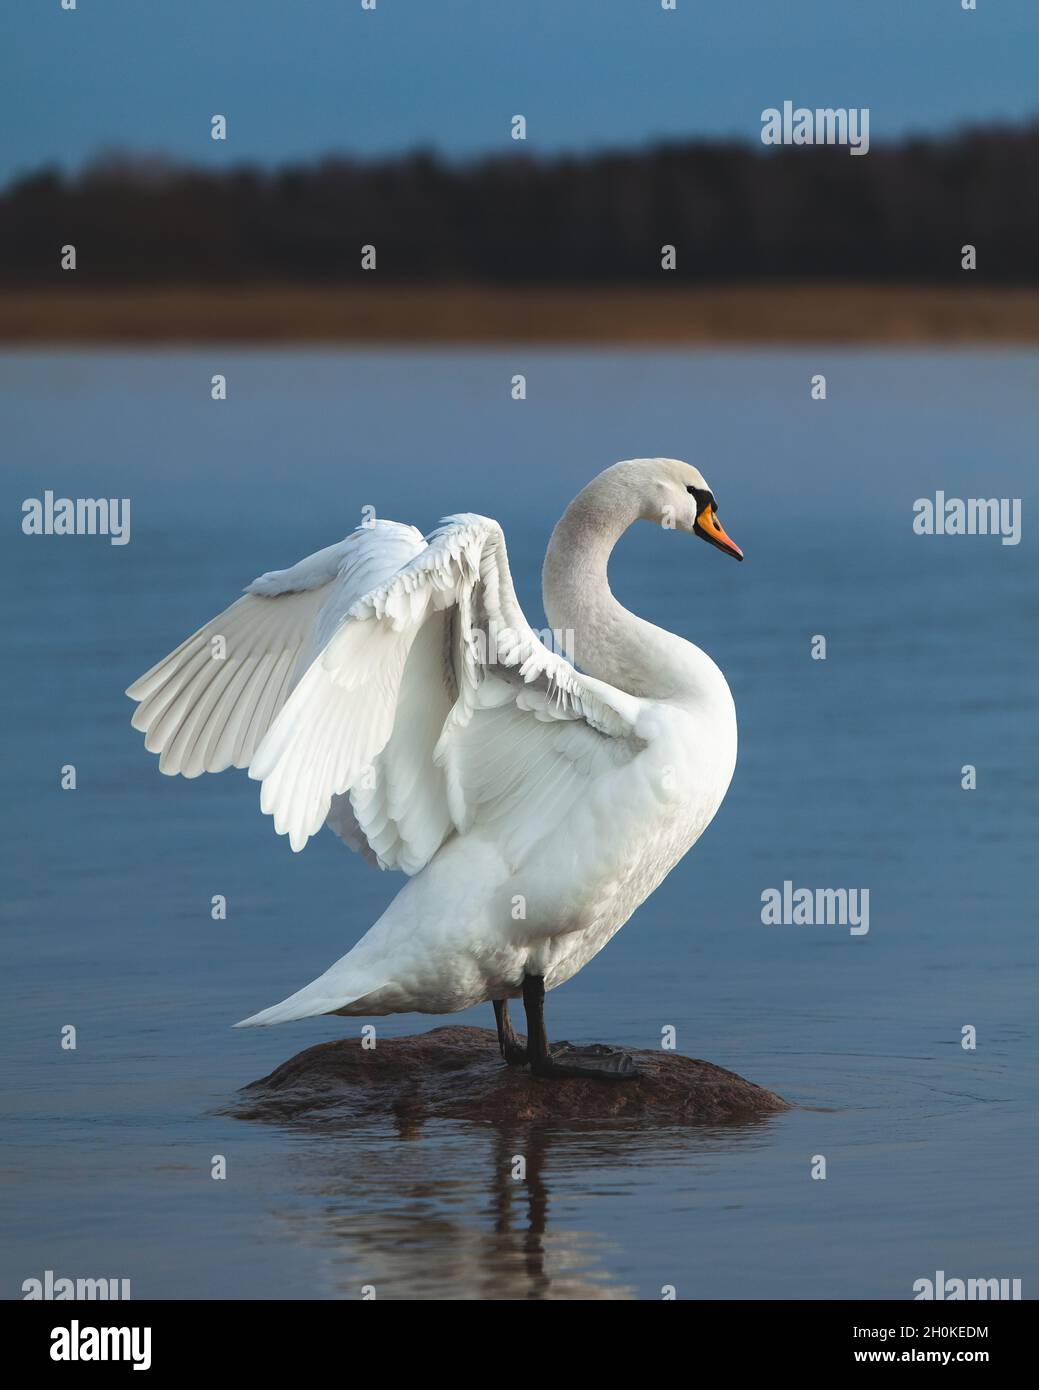 Mute swan on a rock in blue water. Stretching, wings spread. Cygnus olor. Stock Photo